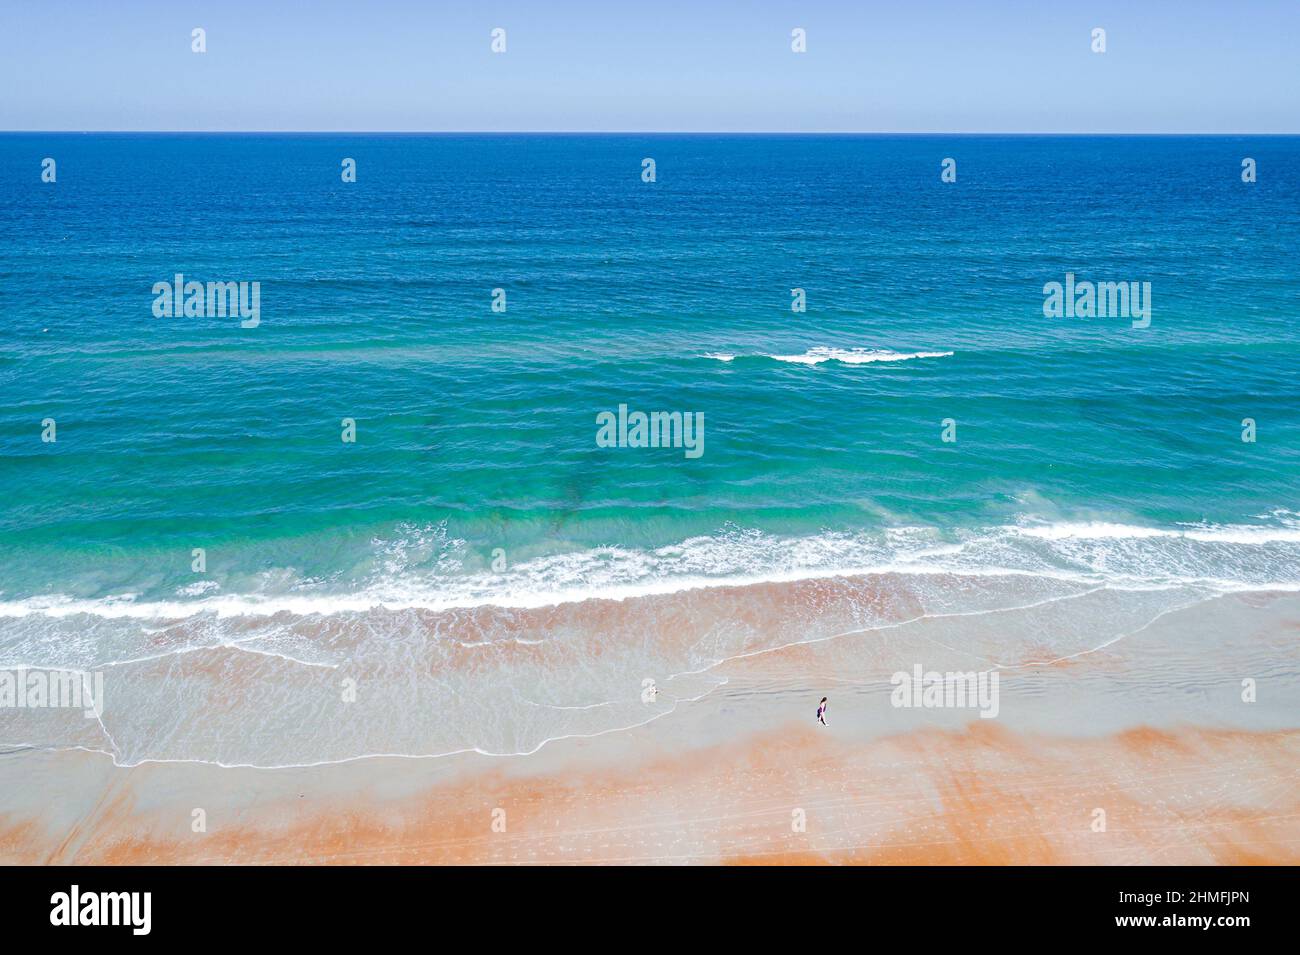 Florida Ormond Beach by the Sea, Oceano Atlantico, acqua, vista aerea dall'alto da sopra onde surf sabbia Foto Stock